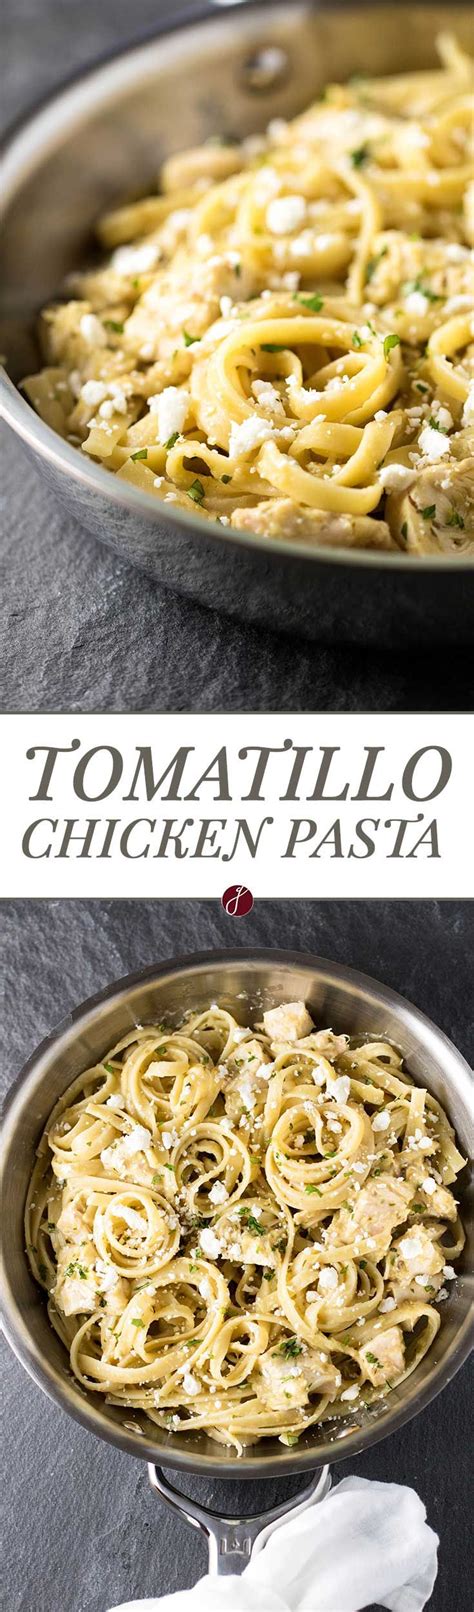 tomatillo chicken pasta recipe recipes diy food recipes tomatillo